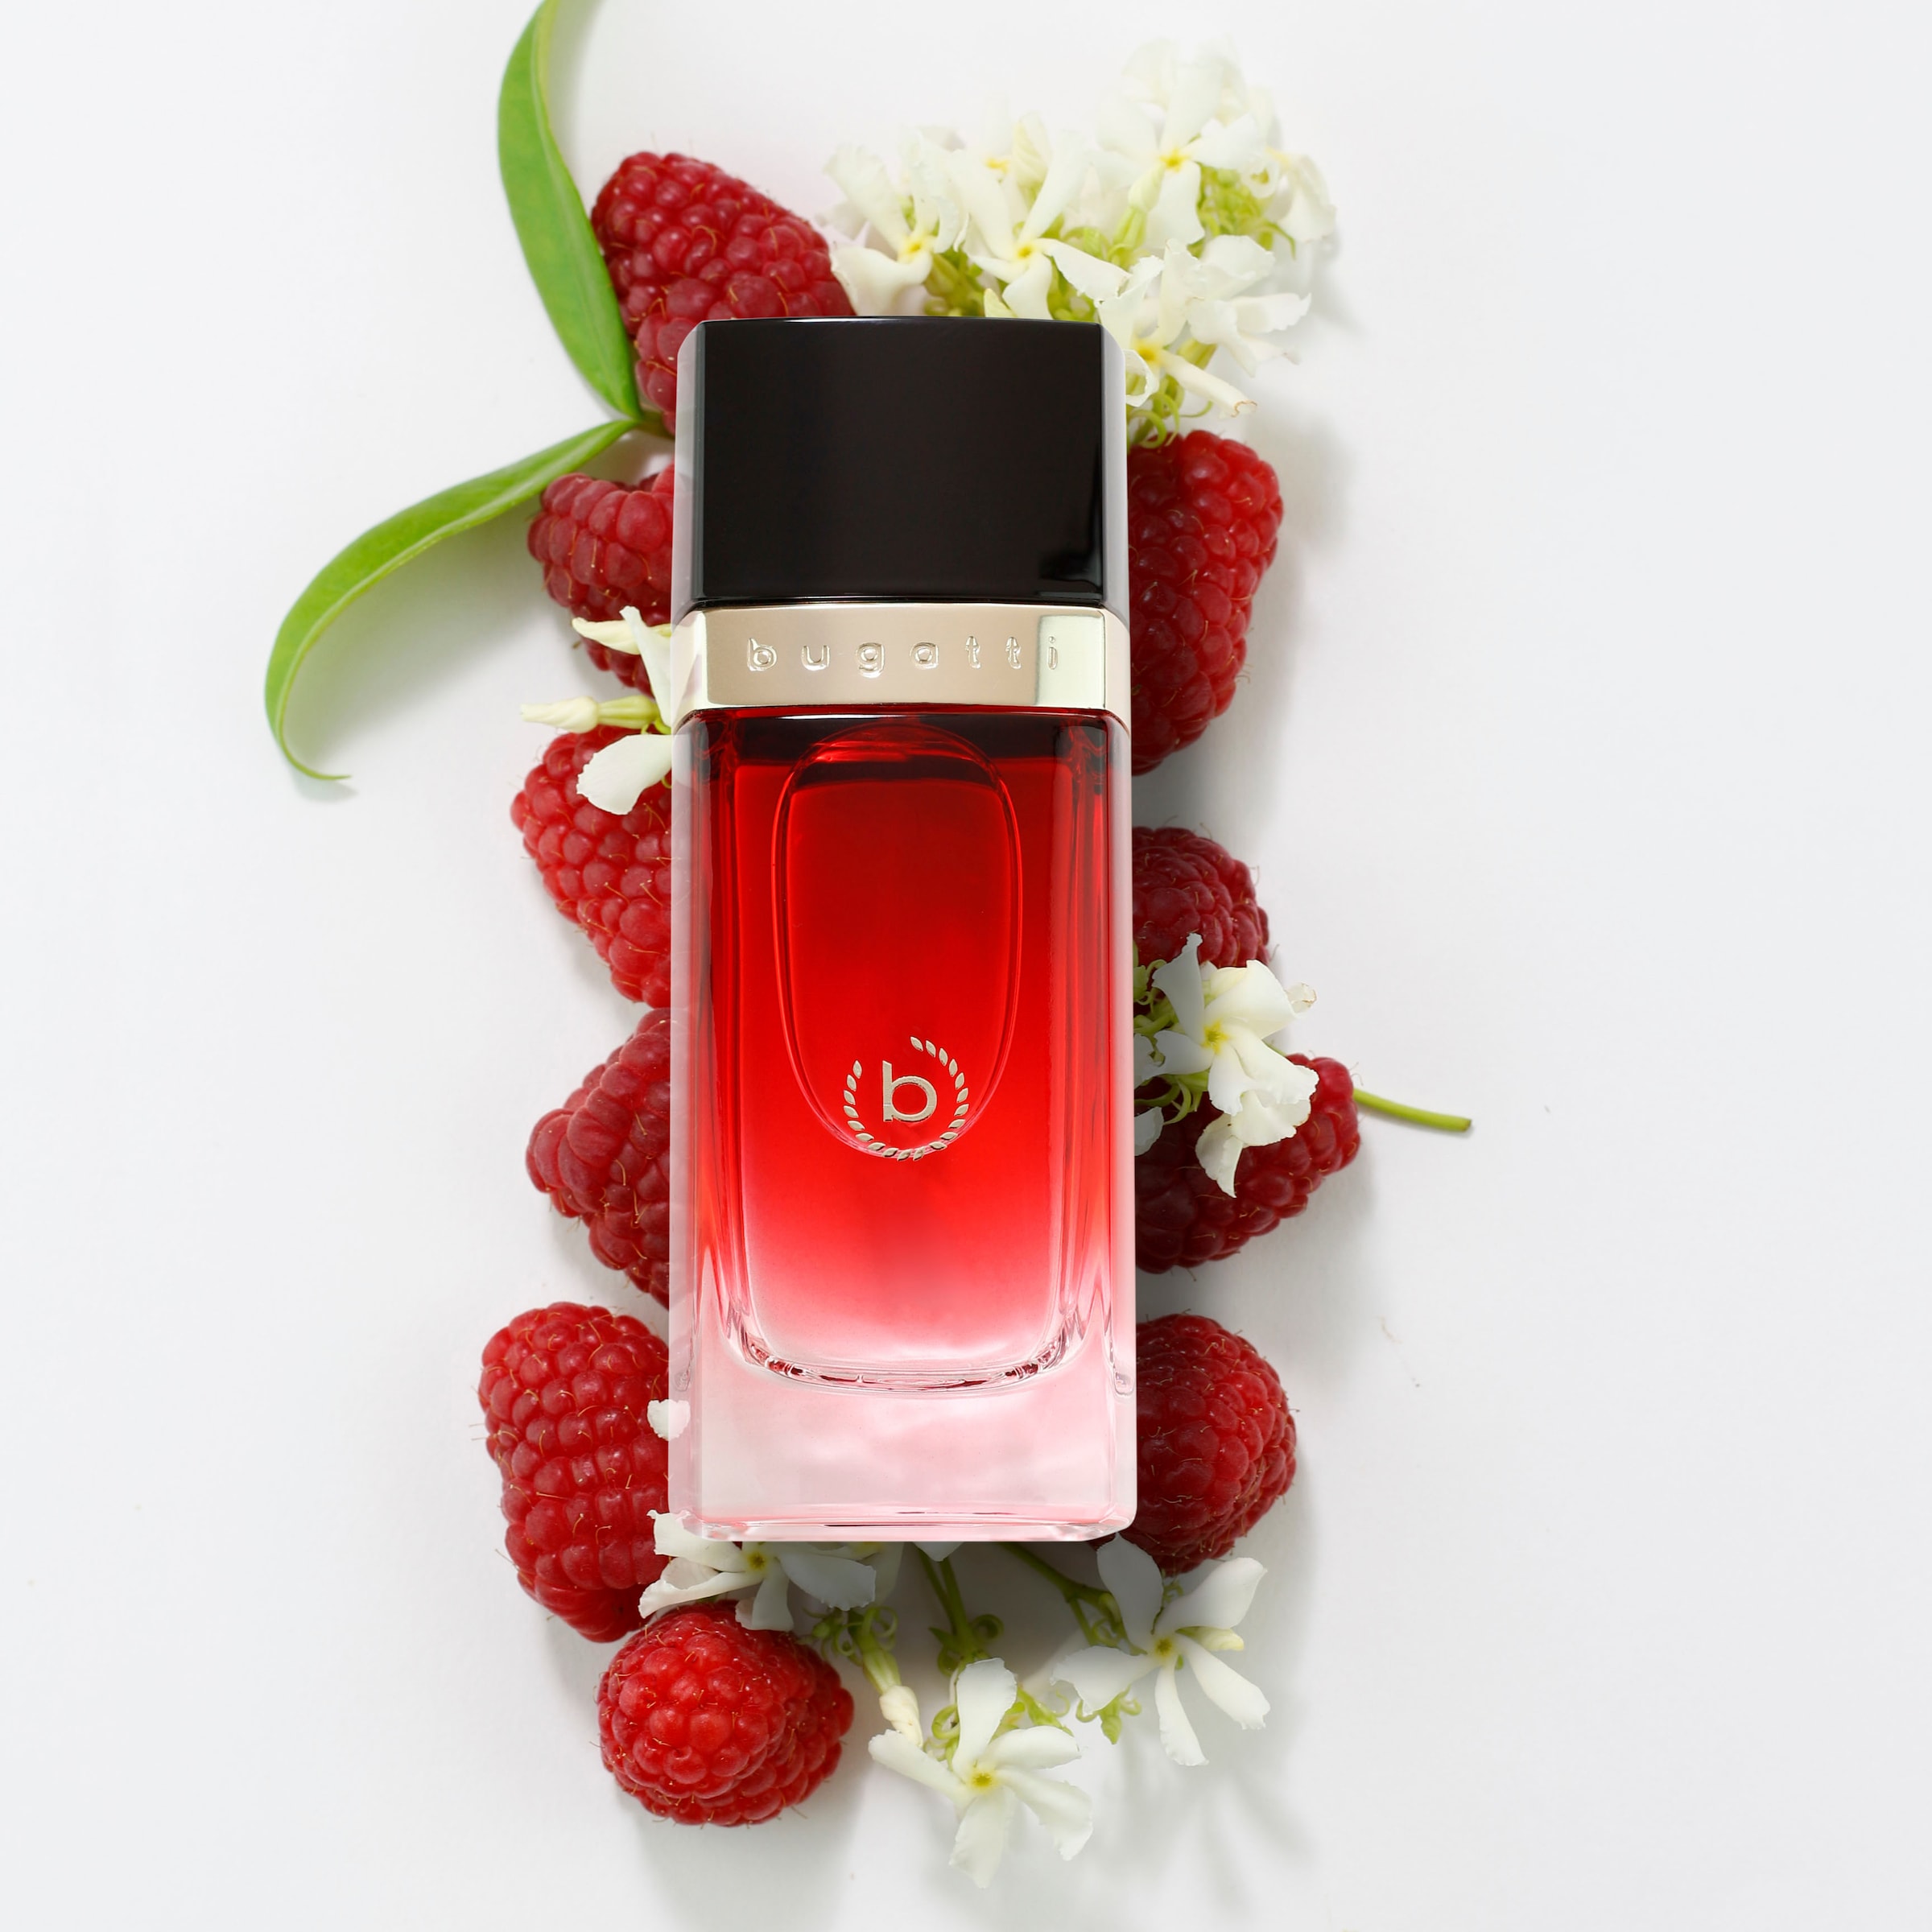 bugatti Eau de Parfum »BUGATTI Eleganza Rossa for her EdP 60 ml« kaufen |  UNIVERSAL